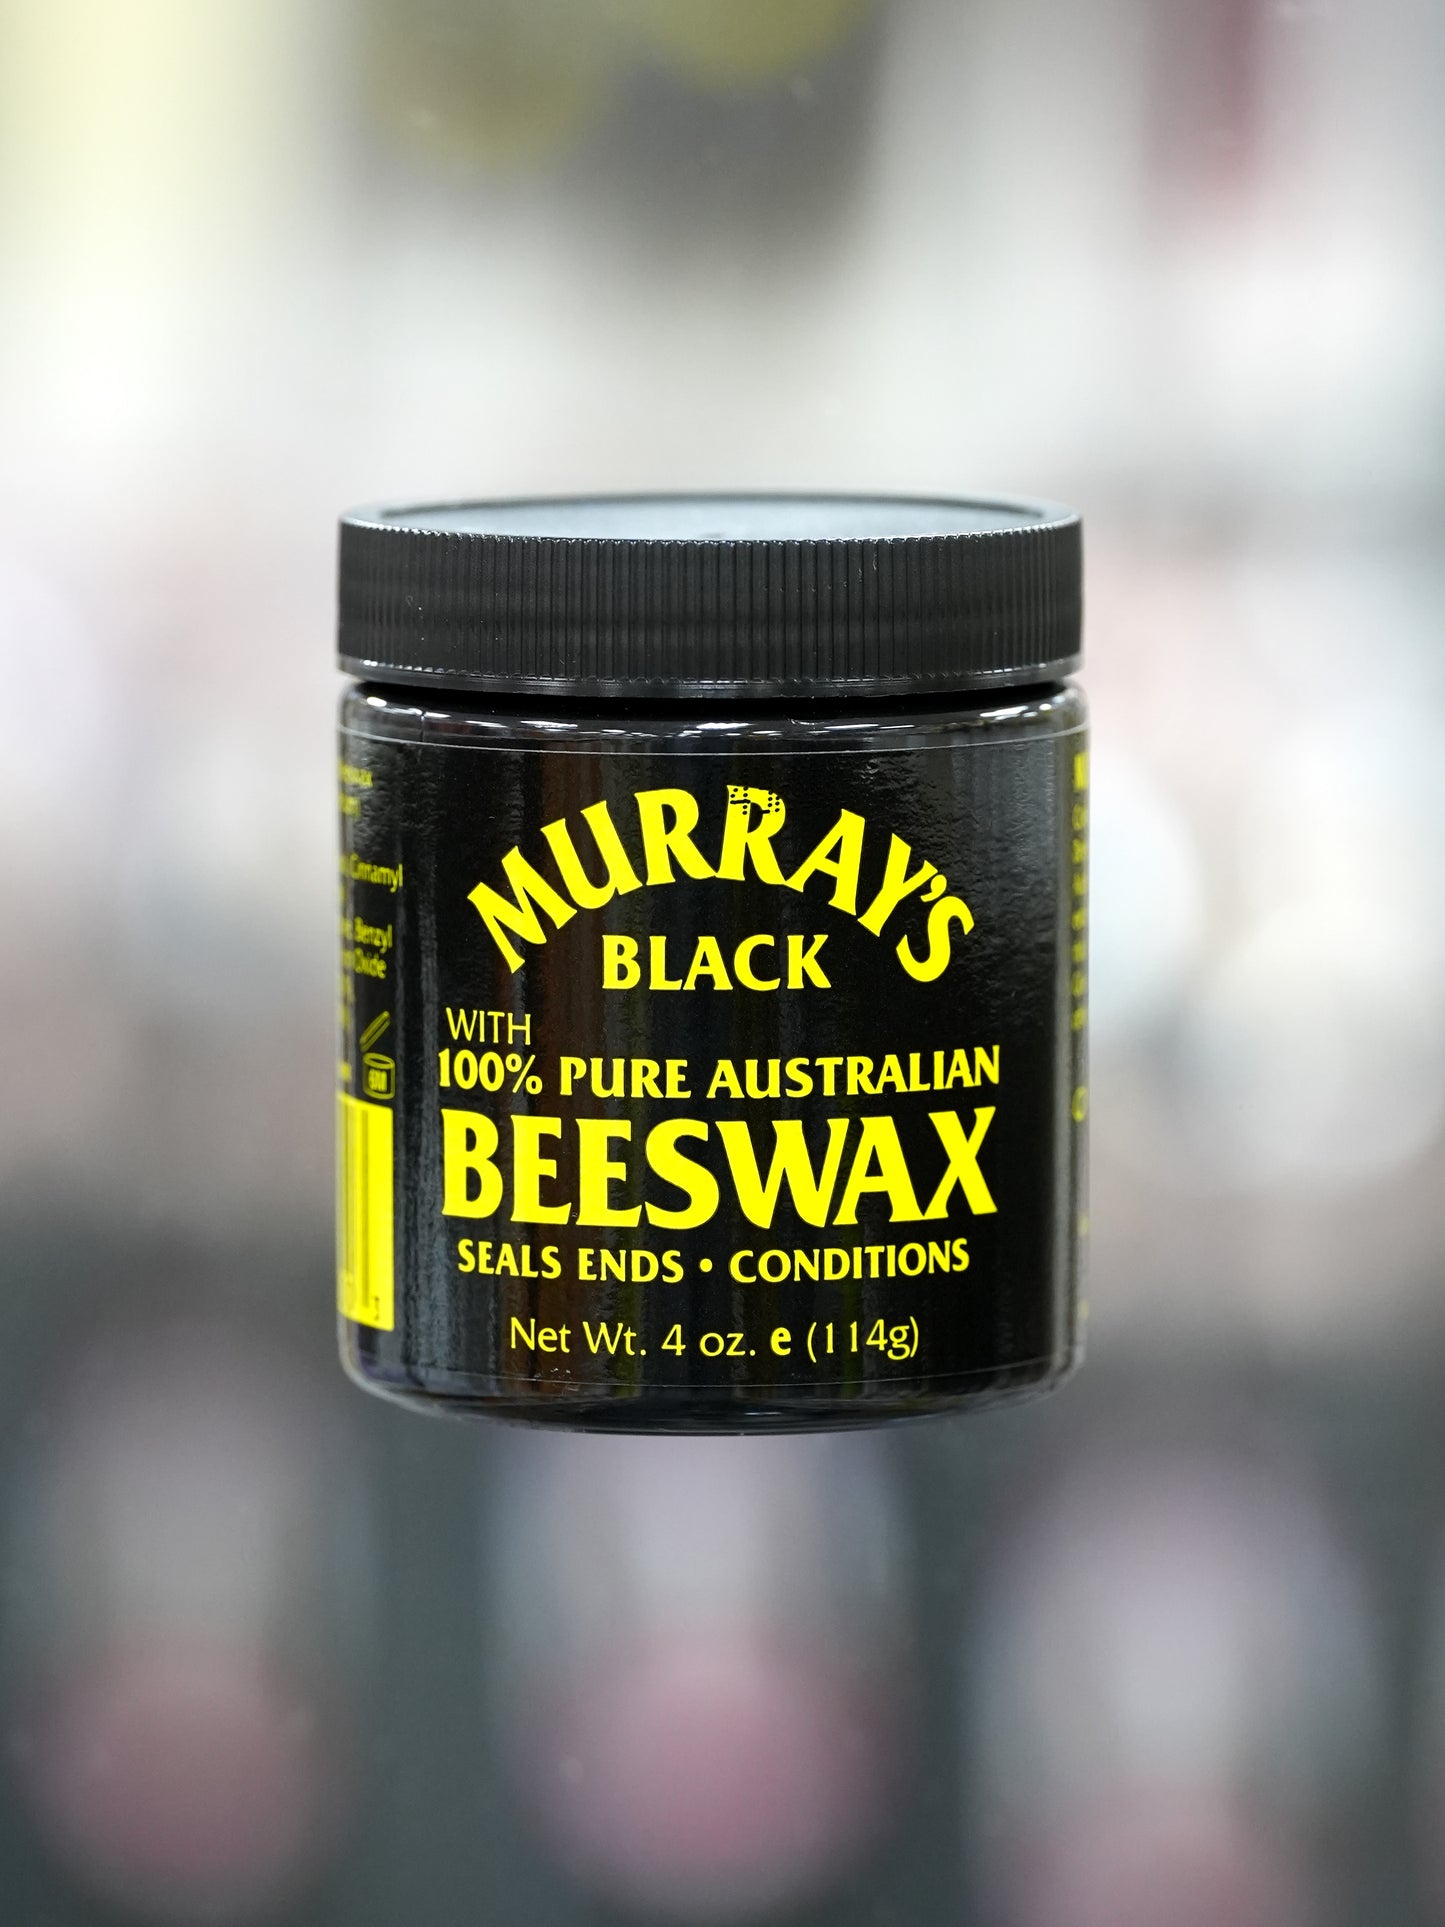 Murray's Black 100% Pure Australian Beeswax Seals Ends